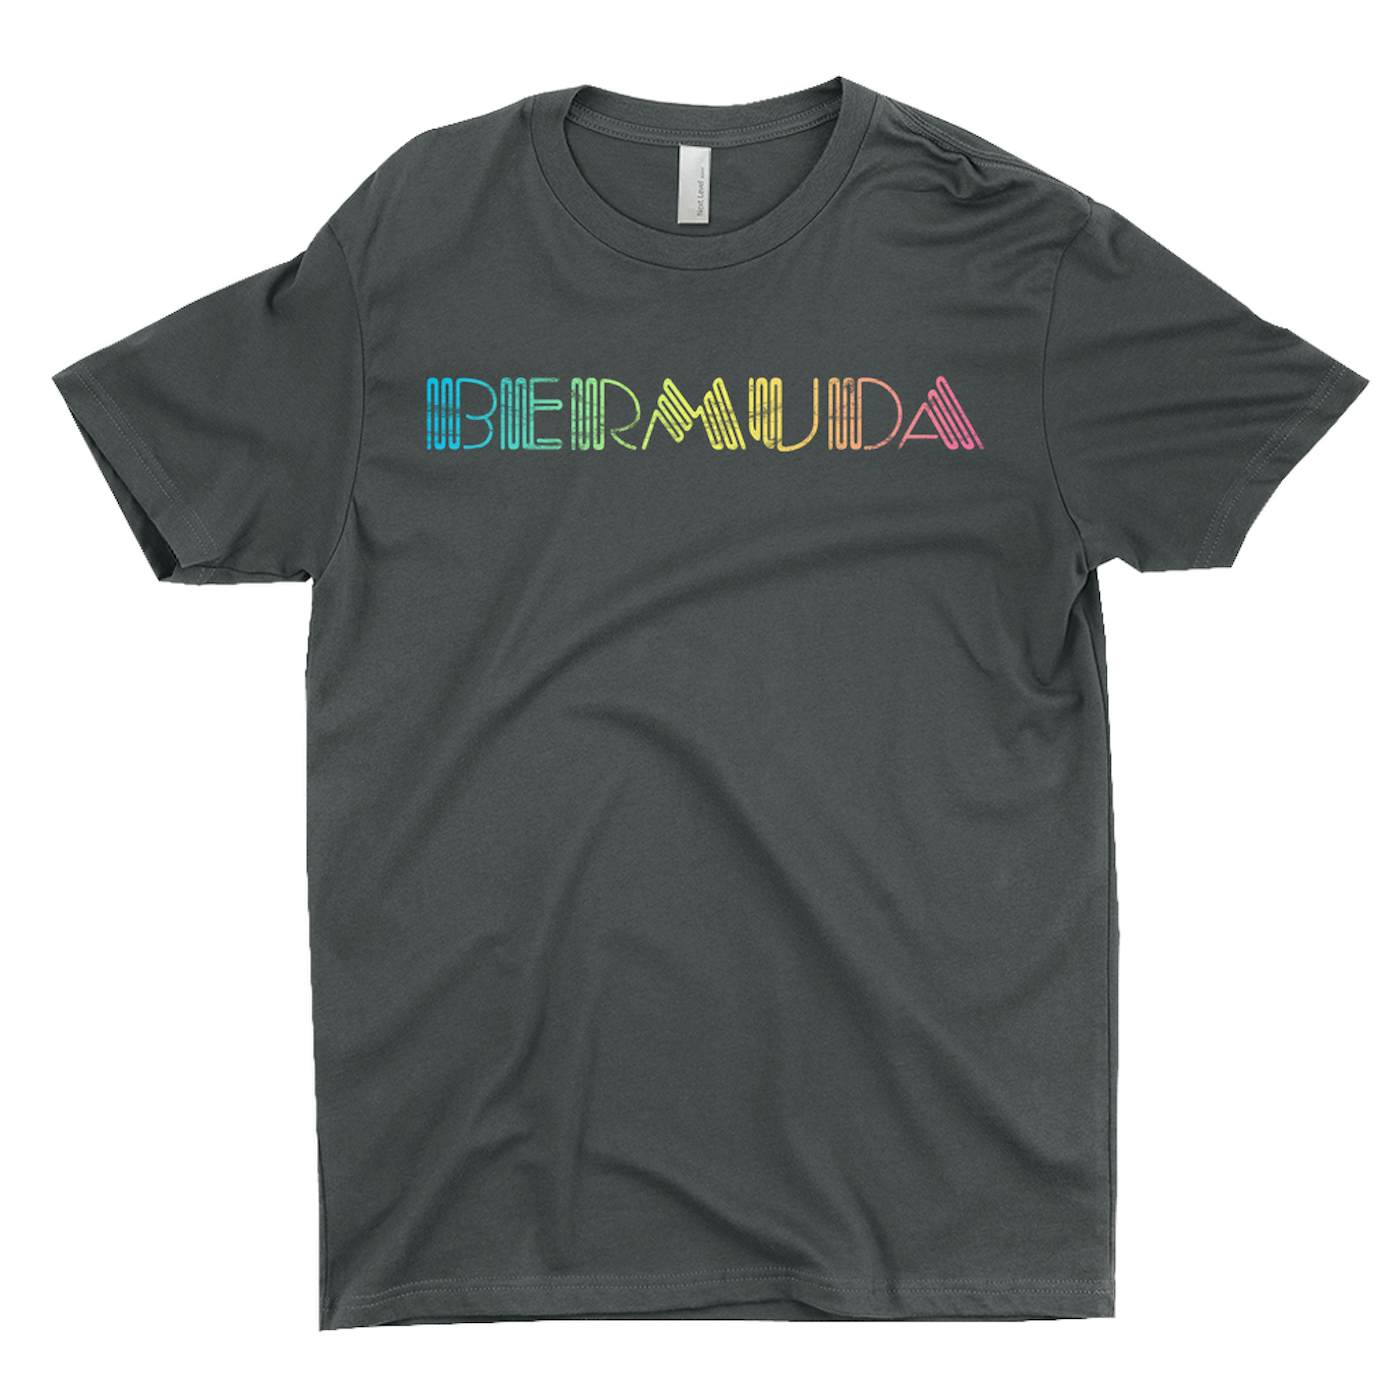 John Lennon T-Shirt | Colorful Bermuda Design Worn By John Lennon John Lennon Shirt